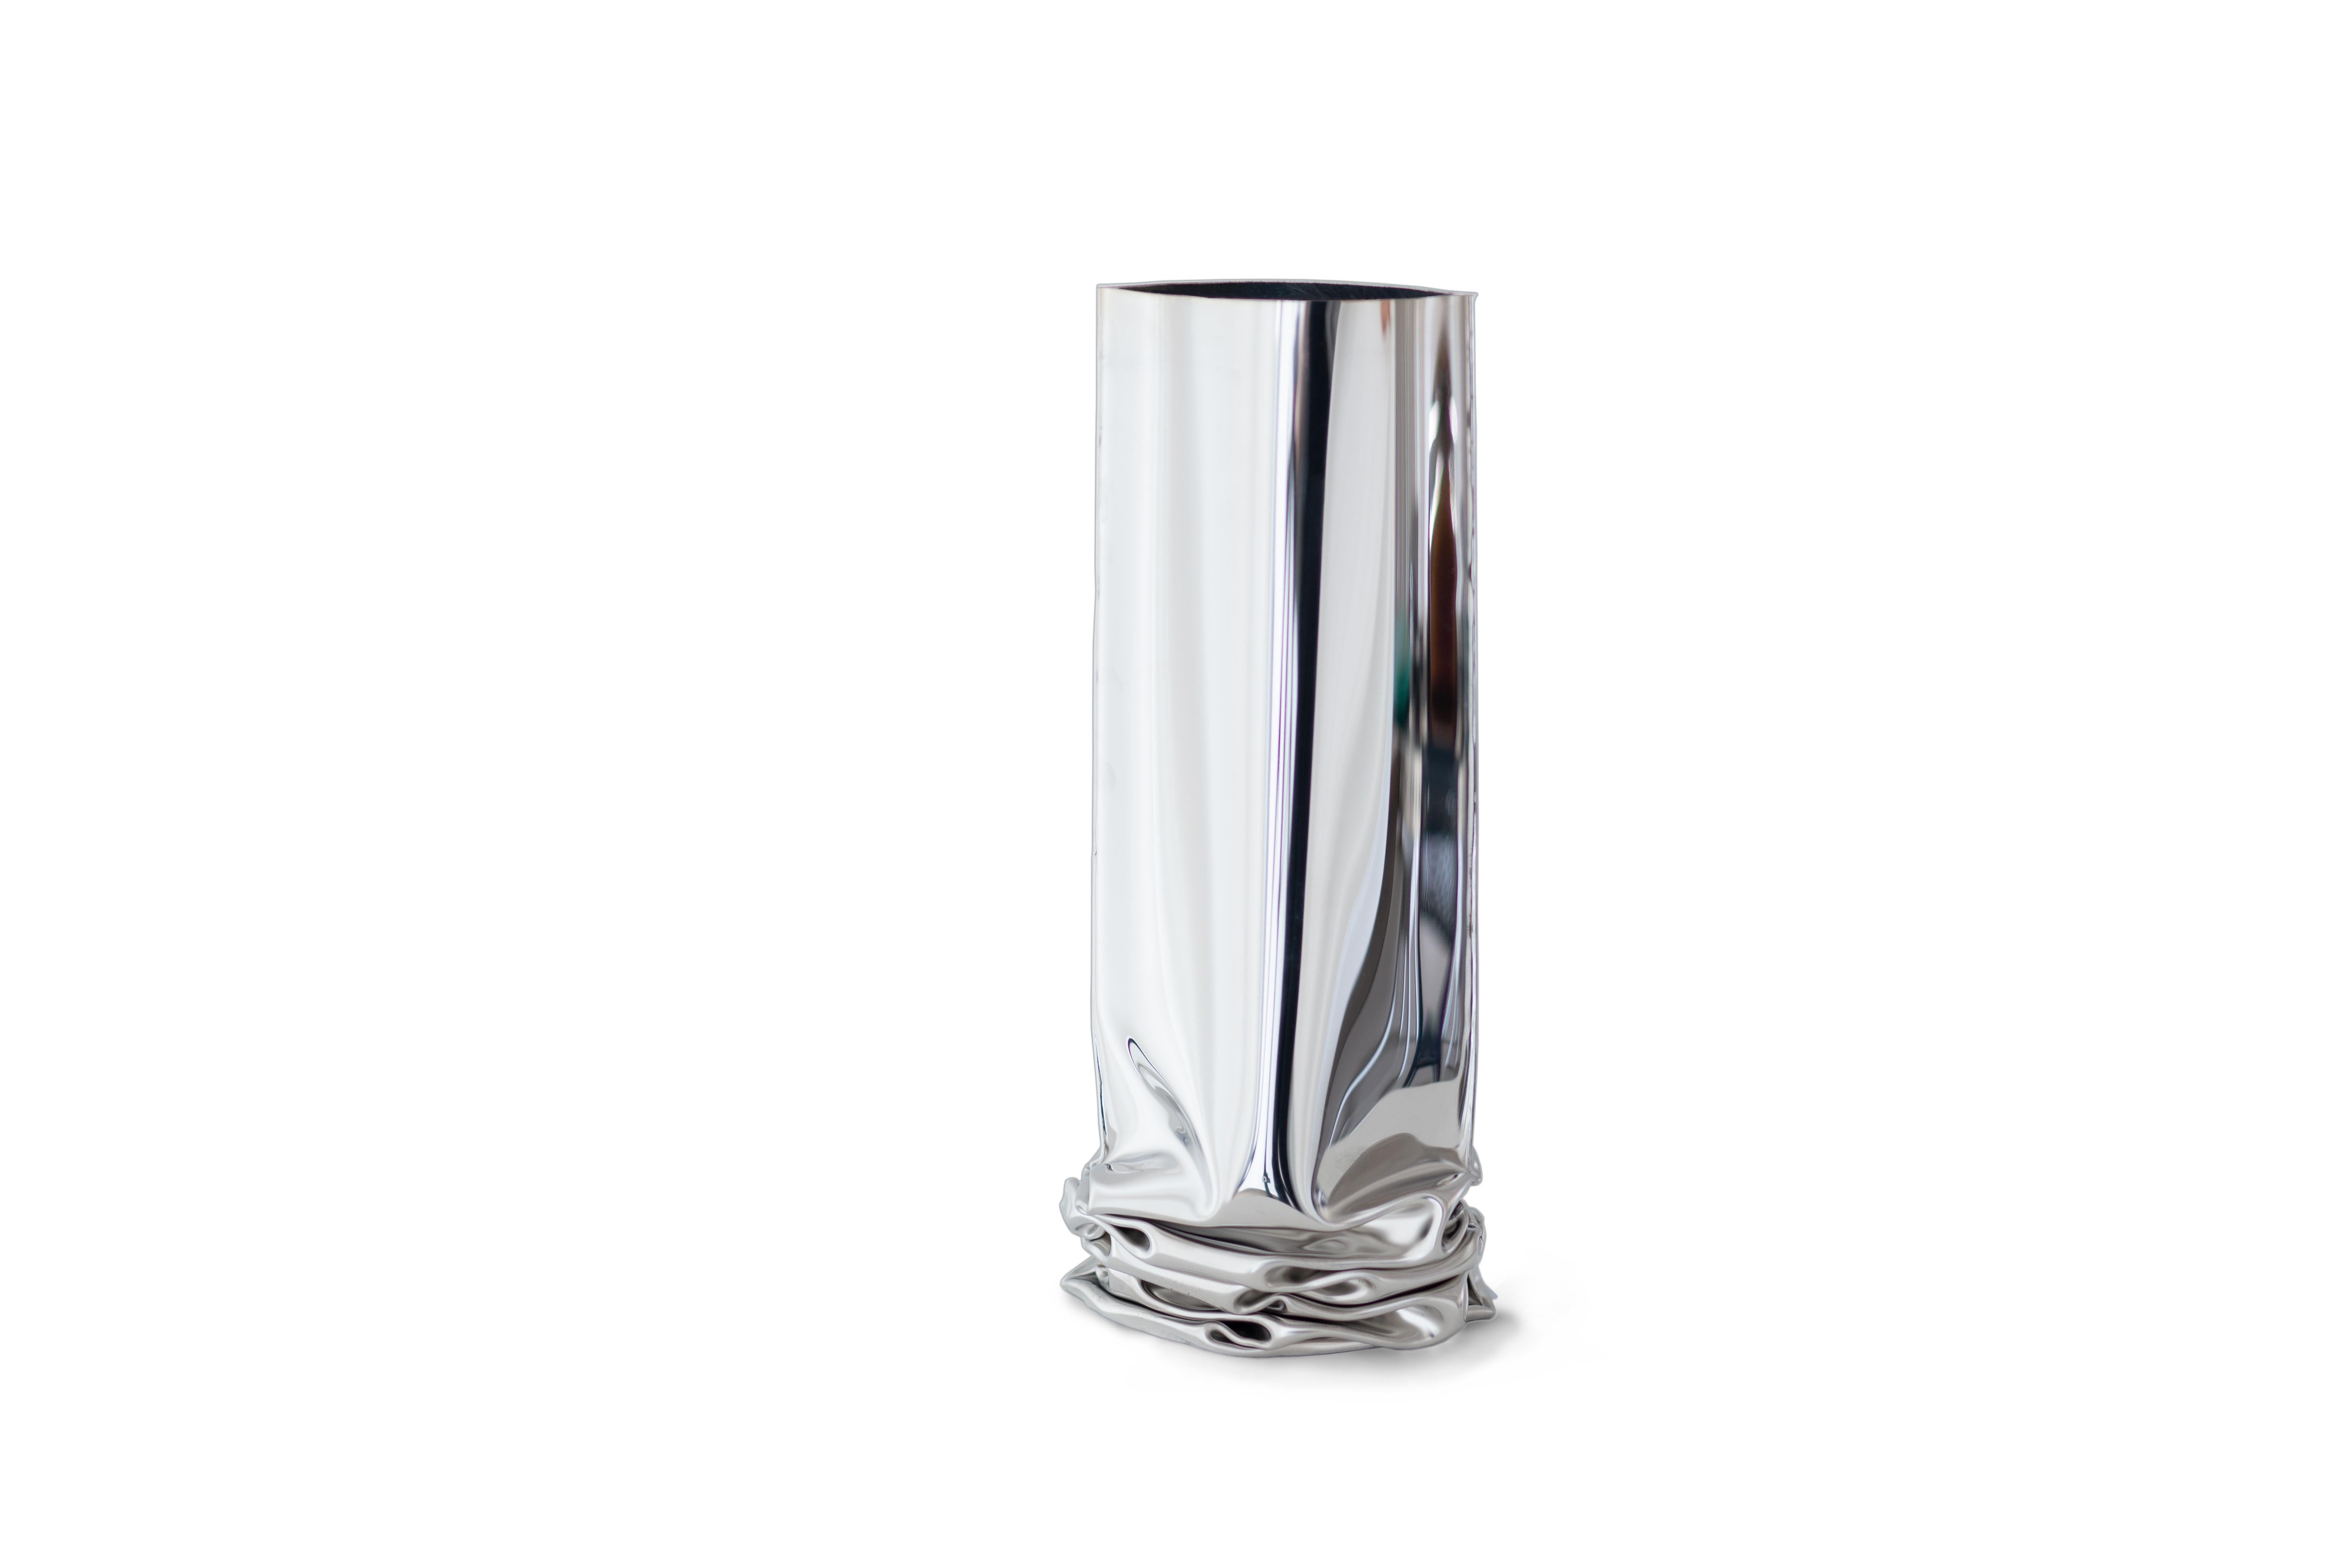 Polish Contemporary Vase, 'Crash Vase' by Zieta, Medium, Stainless Steel For Sale